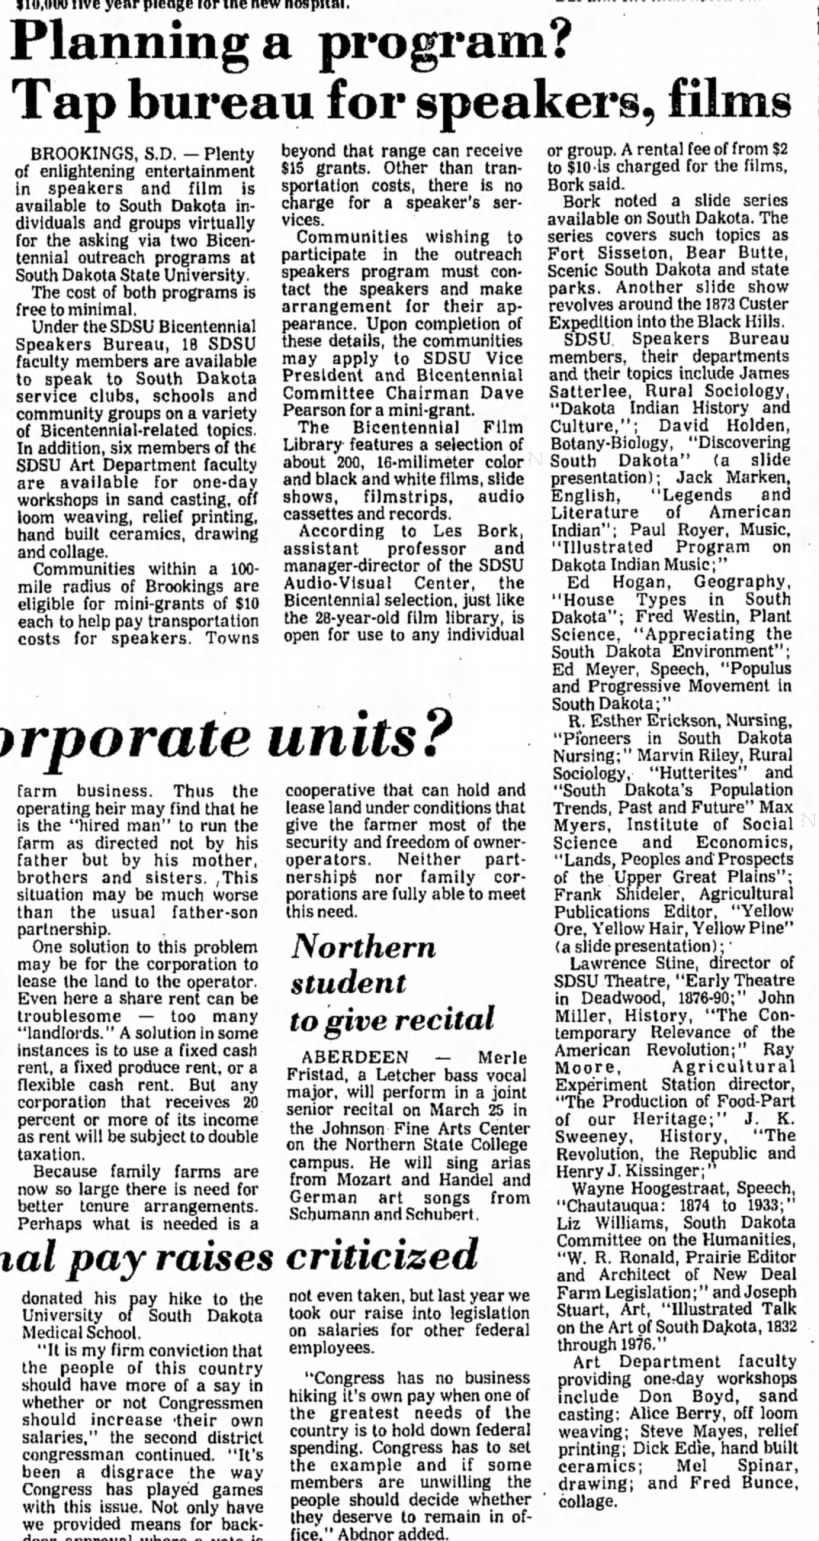 Brookings speakers bureau, The Daily Republic, 23 Mar 1976